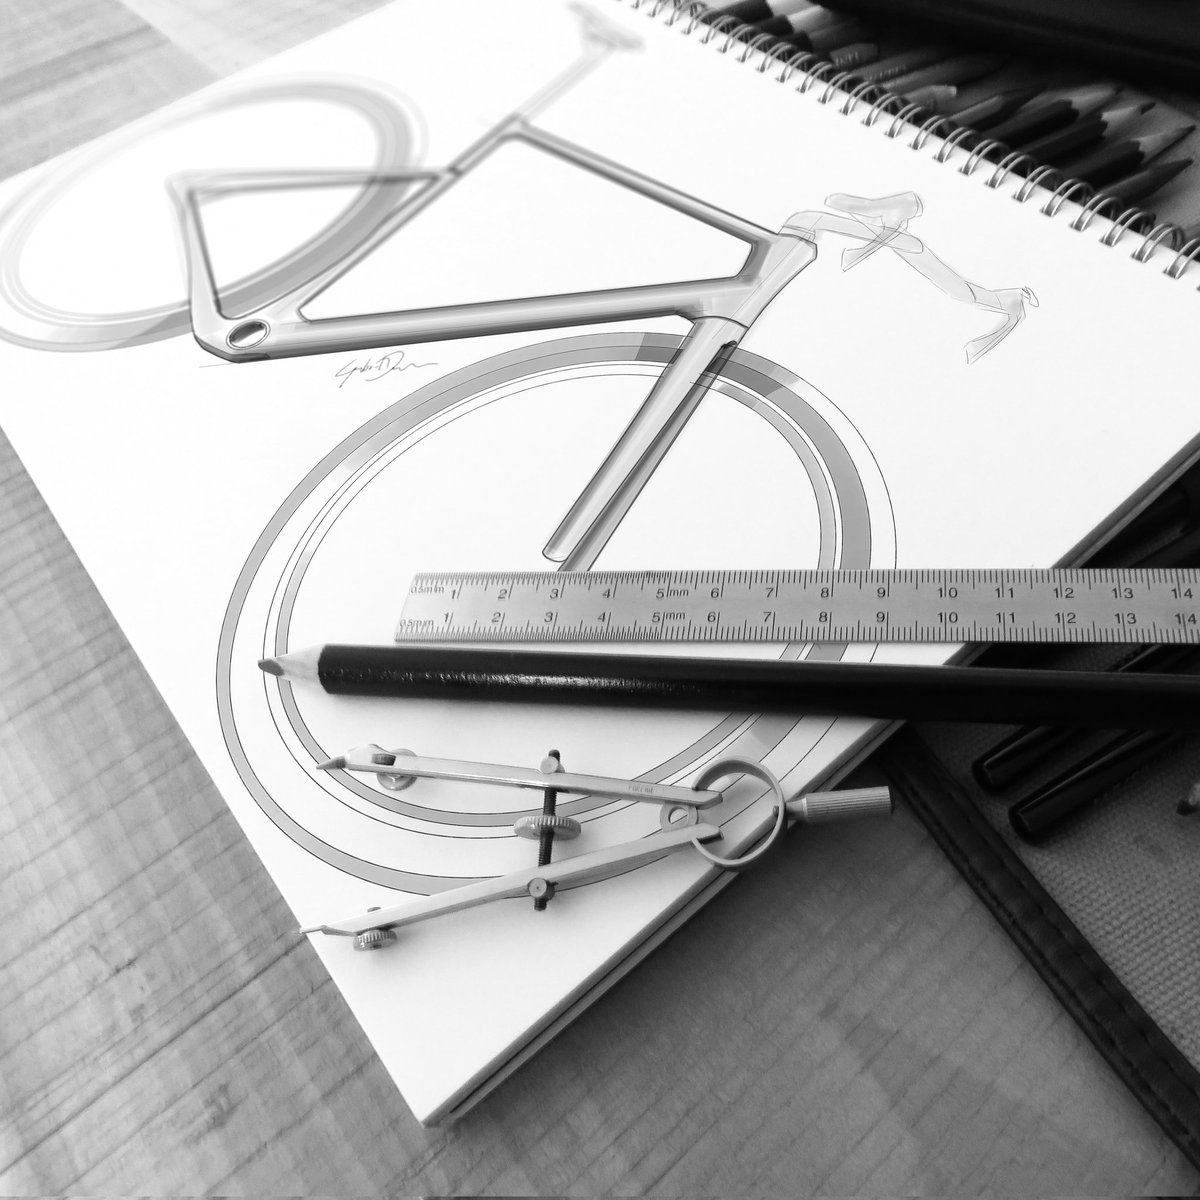 Estudos da Univox 🚵‍♂️✍
#design #industrialdesign #sketchaday #sketchbook #sketch #idsketch #graphicdesign